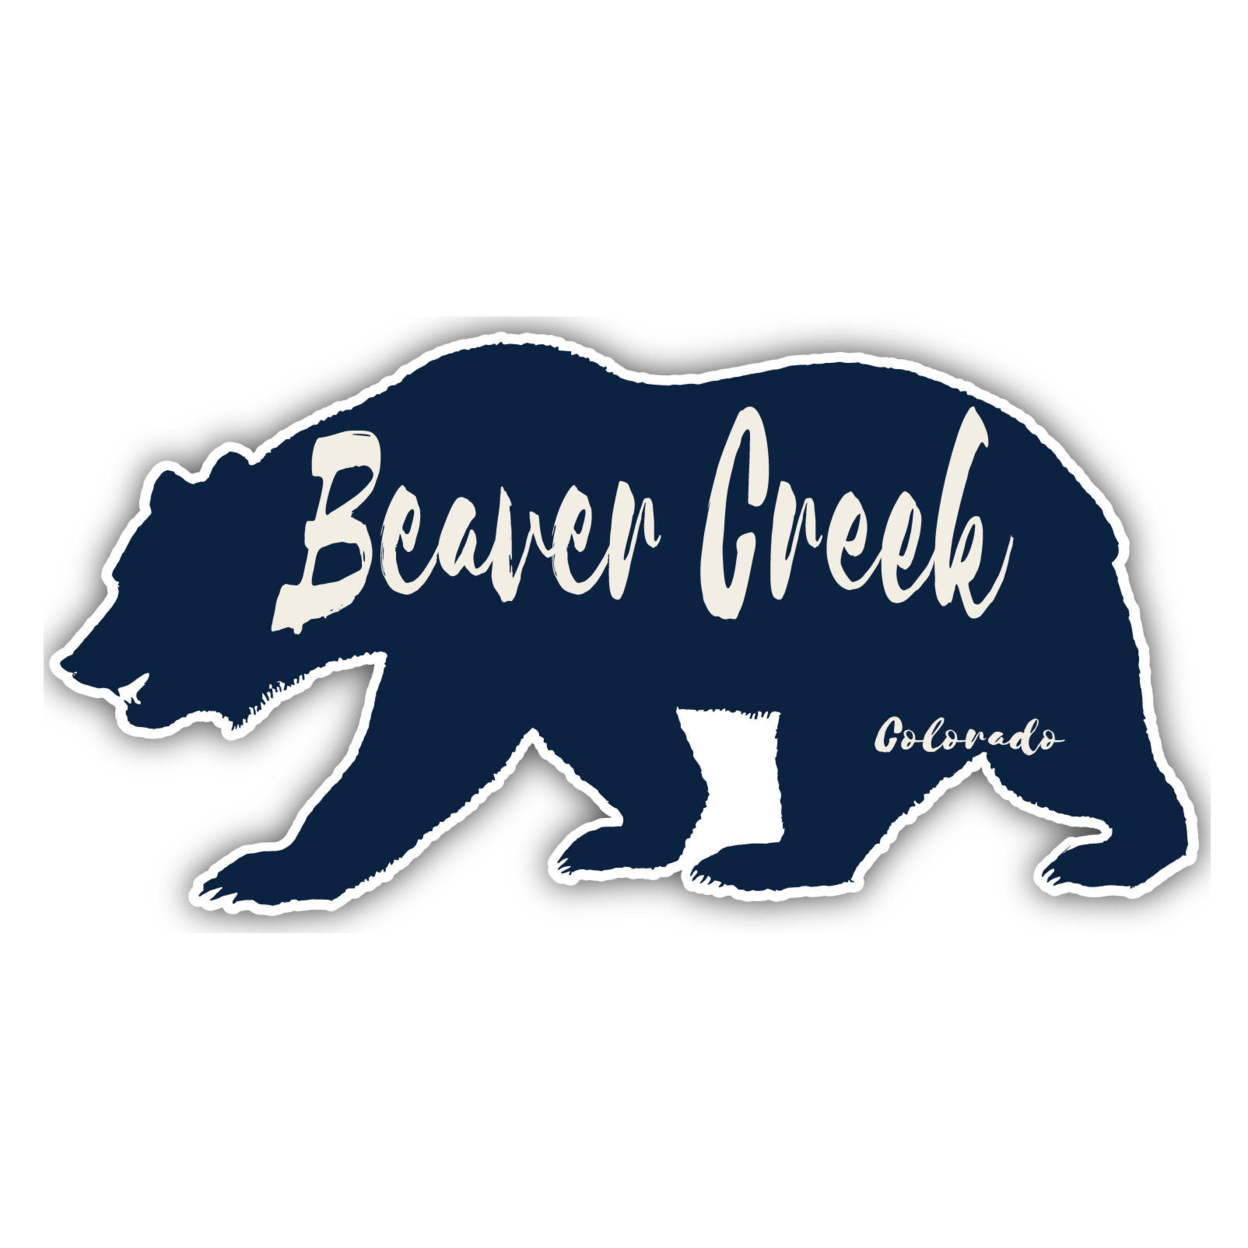 Beaver Creek Colorado Souvenir Decorative Stickers (Choose Theme And Size) - Single Unit, 4-Inch, Great Outdoors